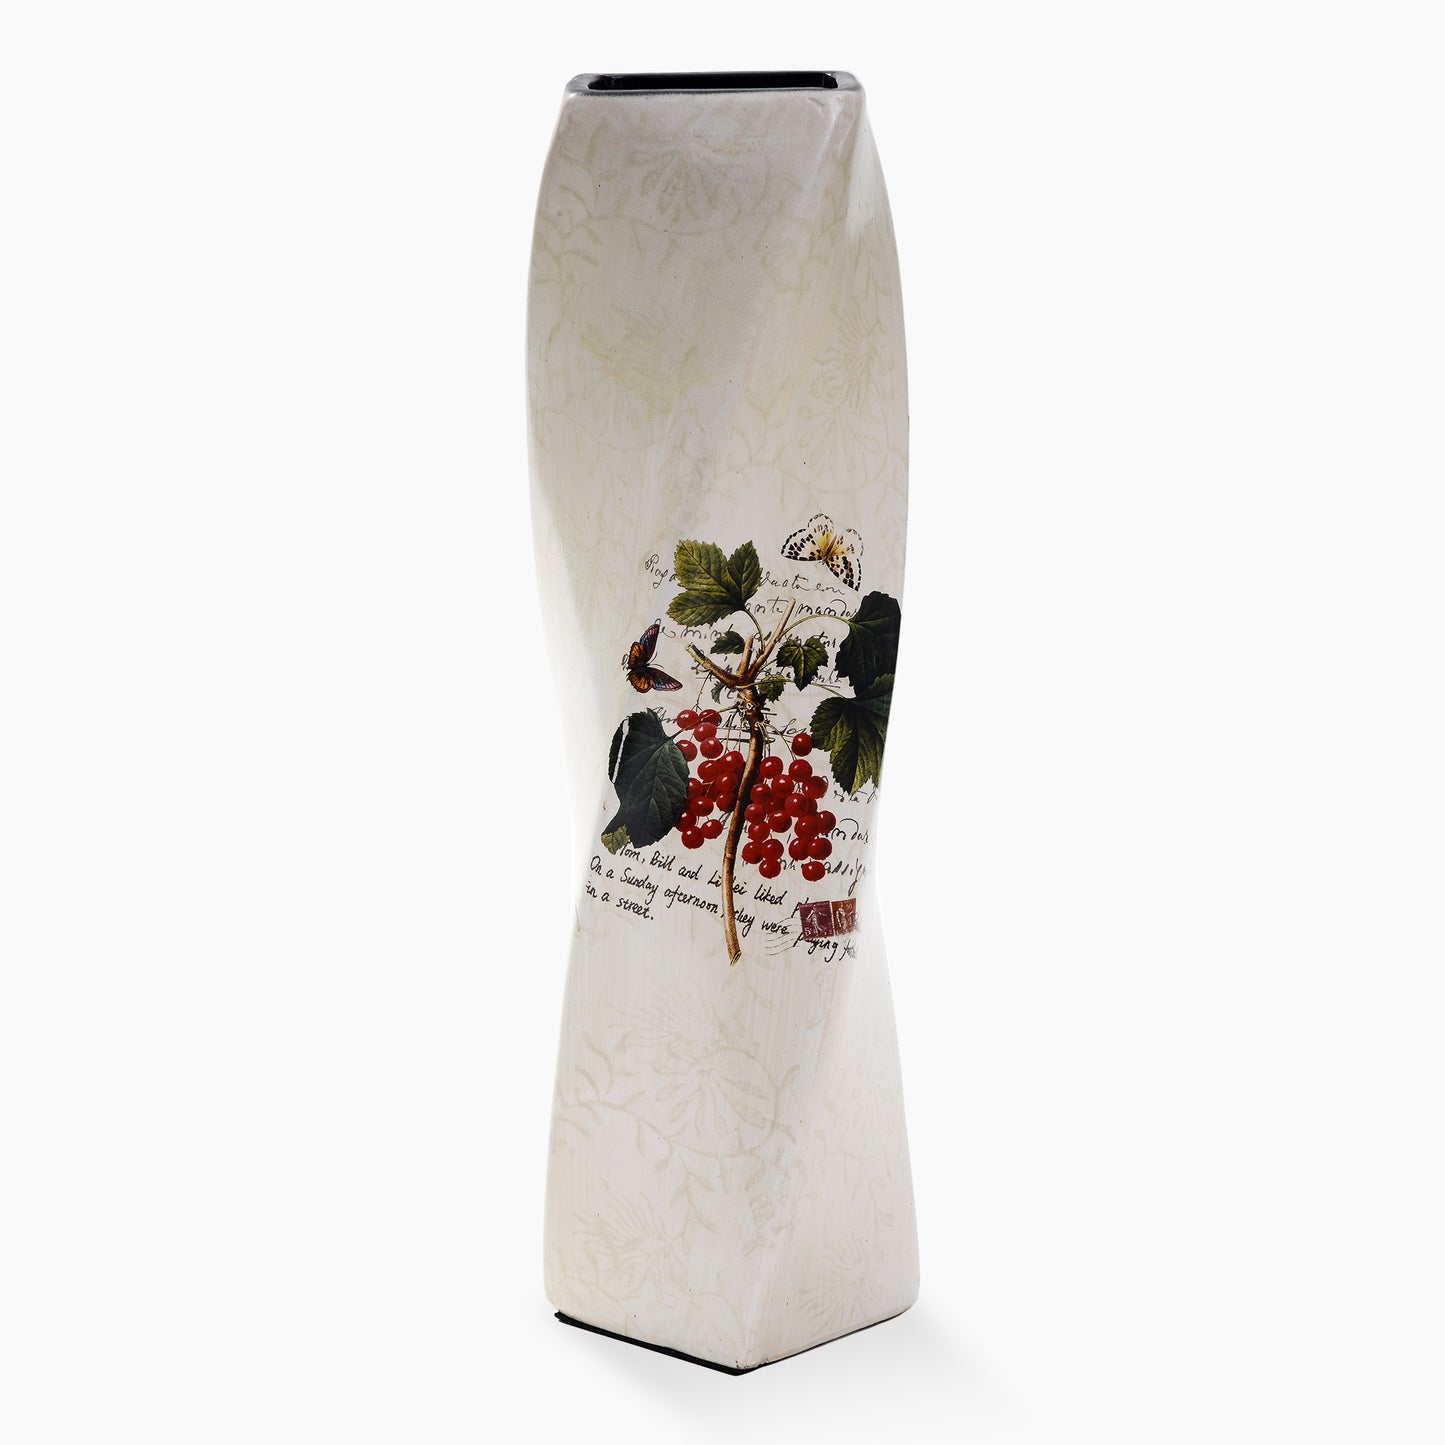 Cherry twisted ceramic vase